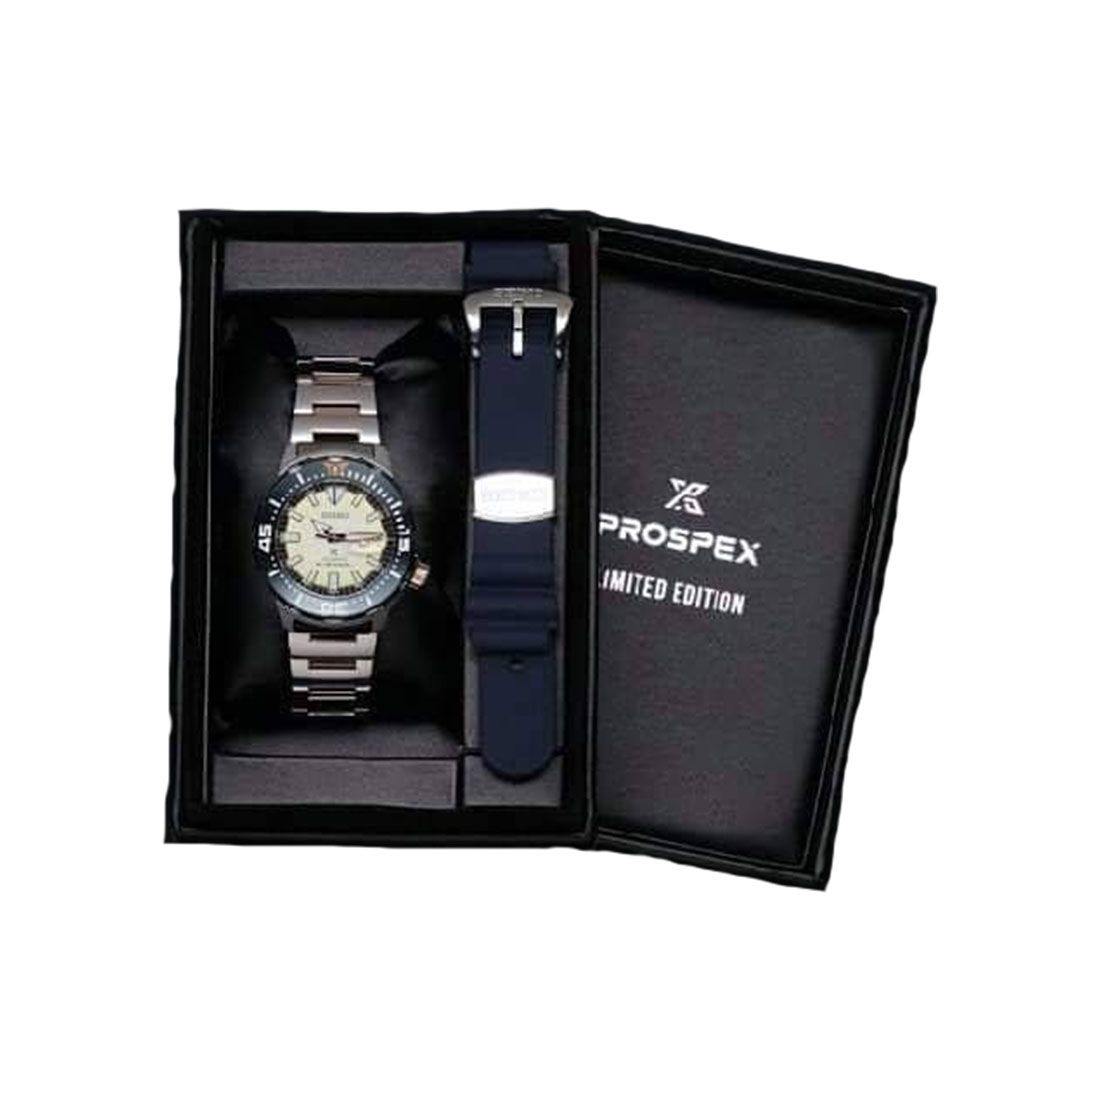 Seiko Prospex Monster PH TR Limited Edition Gen 4 Diver's 200M Men's Watch SRPF33K1 - Diligence1International